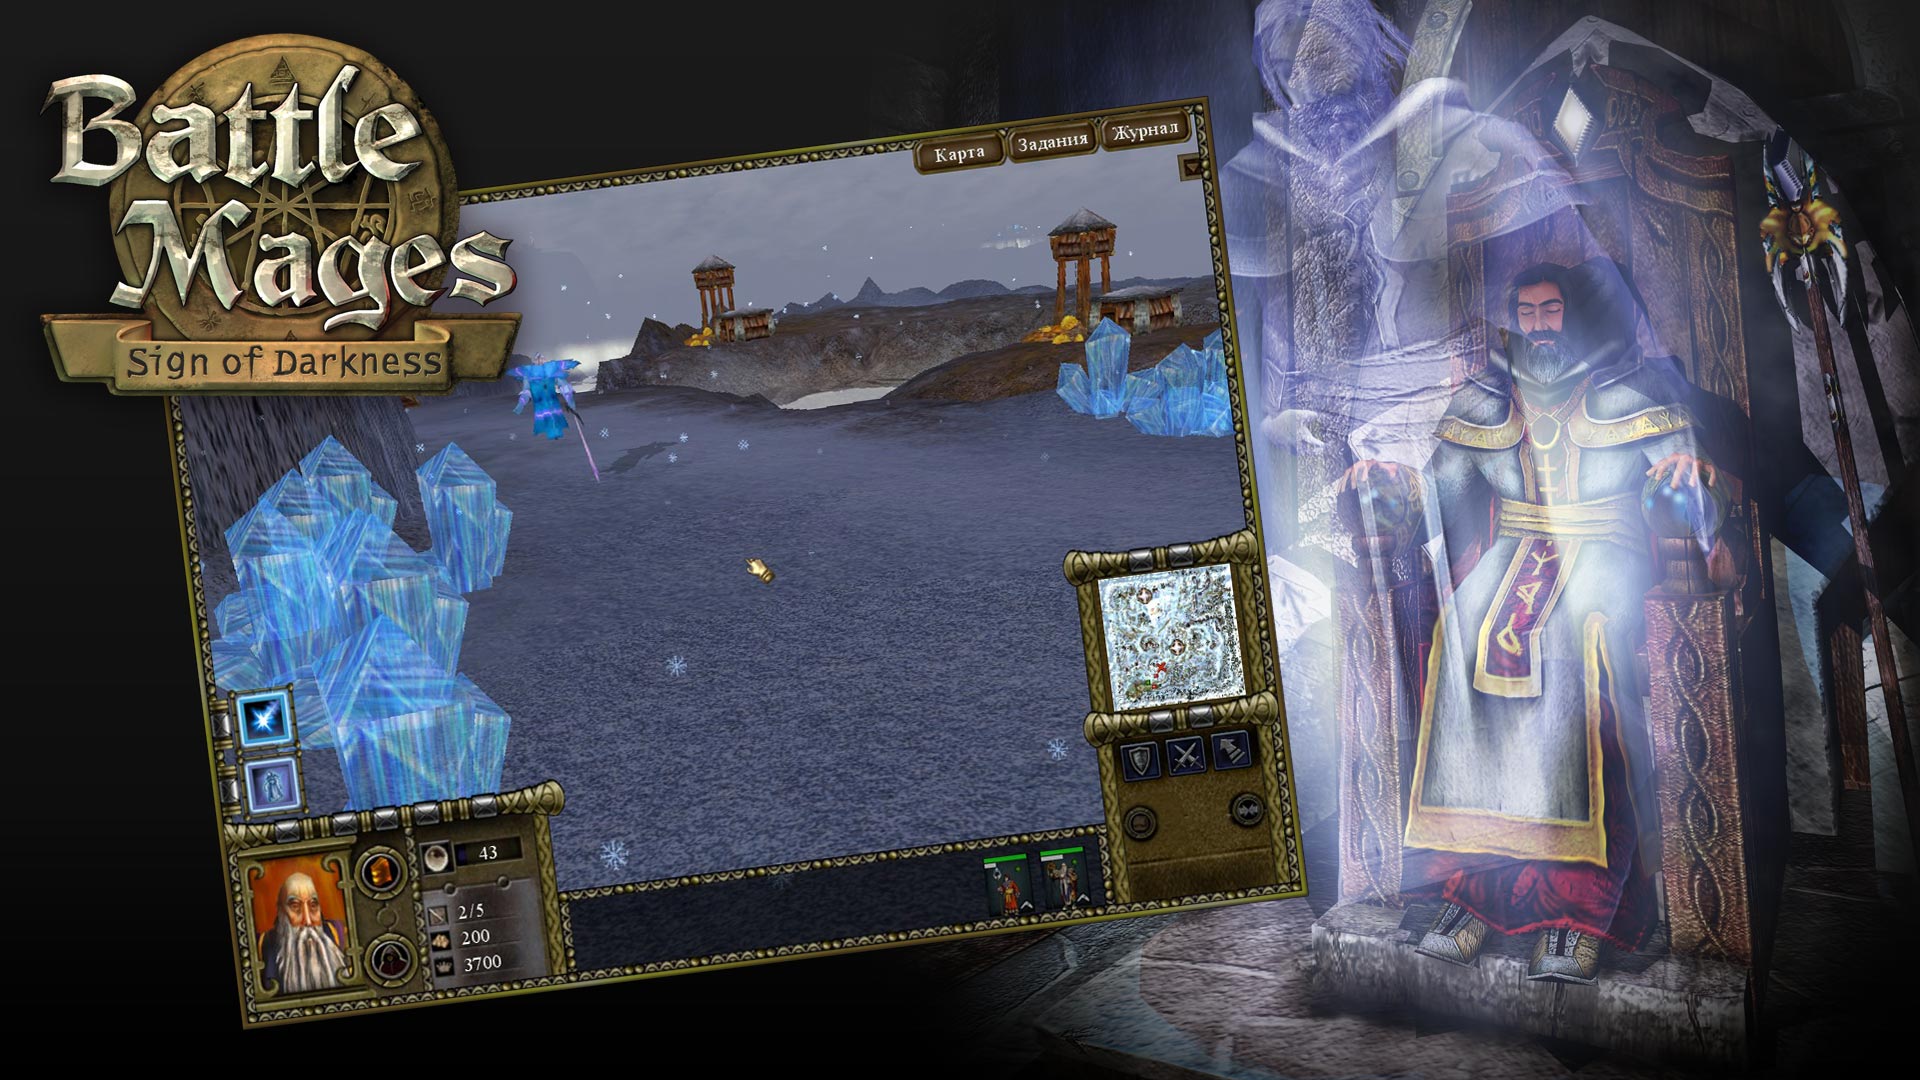 Battle Mages: Sign of Darkness screenshot